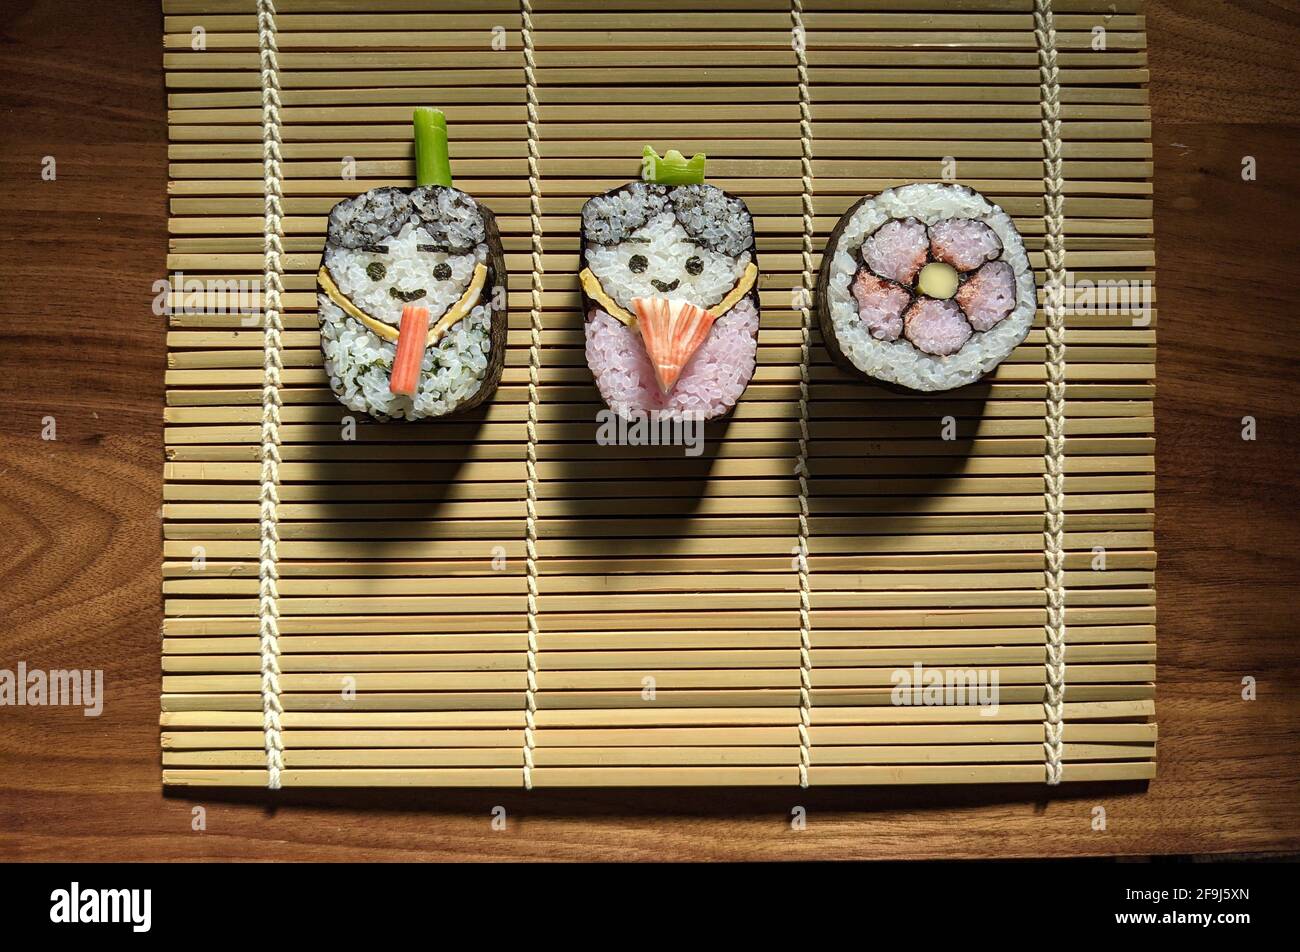 https://c8.alamy.com/comp/2F9J5XN/makisu-bamboo-mat-for-cooking-rolled-cuisine-rolled-sushi-for-hinamatsuri-japanese-festival-2F9J5XN.jpg